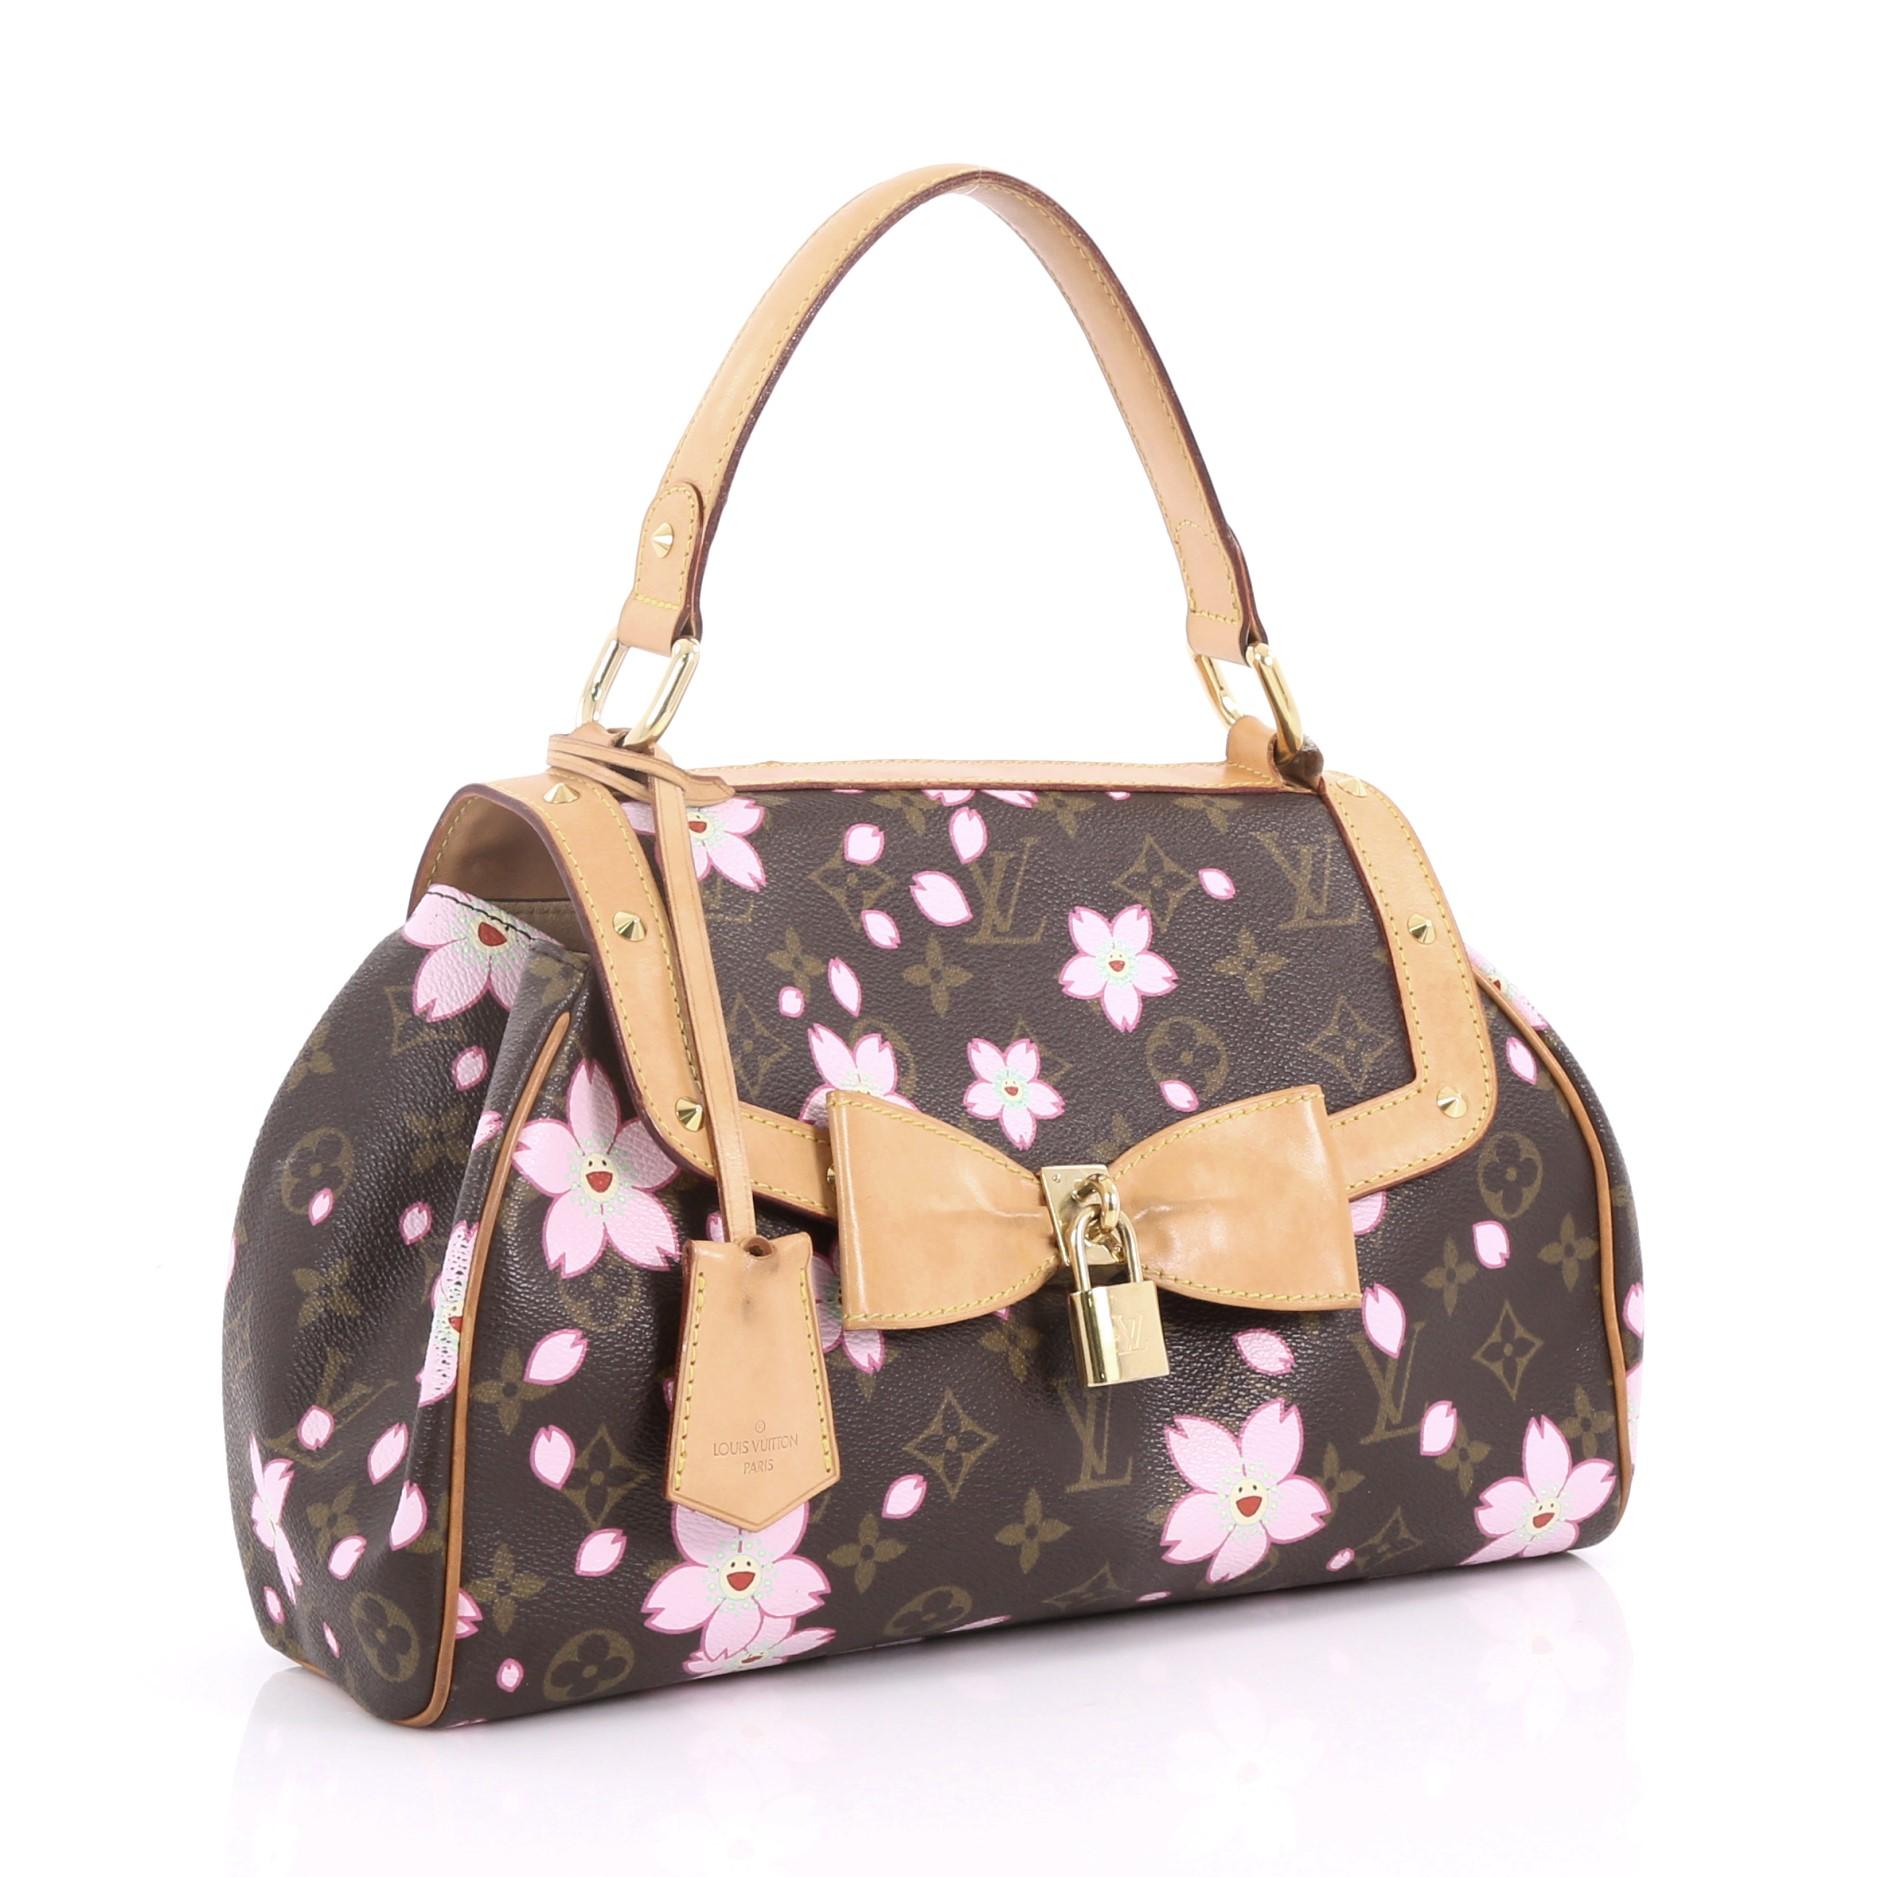 Black Louis Vuitton Retro Bag Limited Edition Cherry Blossom